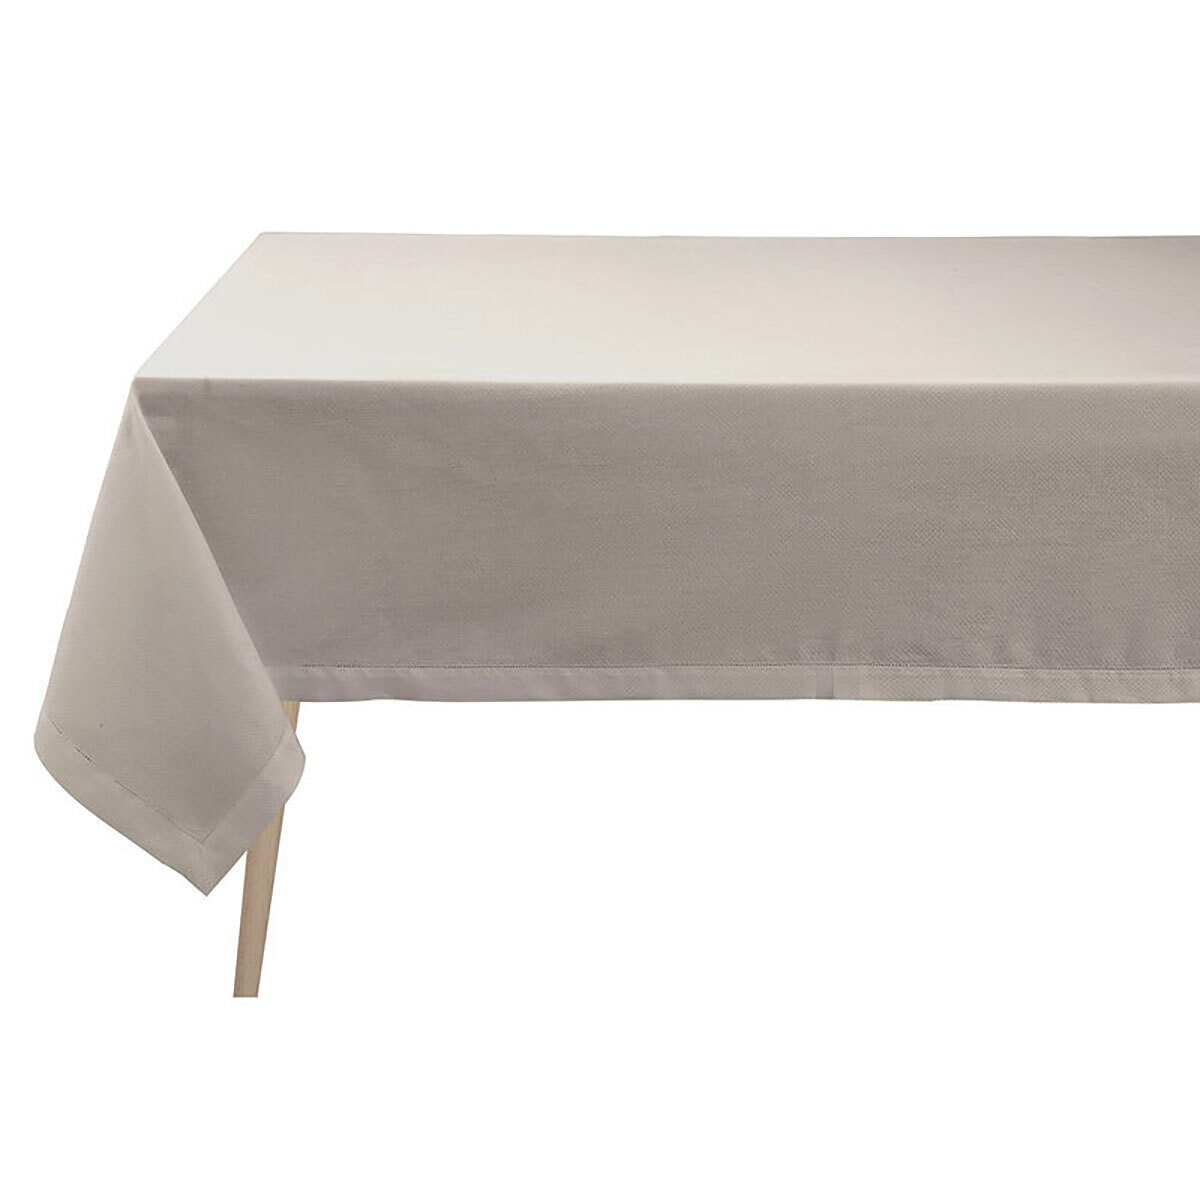 Le Jacquard Francais Portofino Beige Tablecloth 69 x 126 Inch 27356